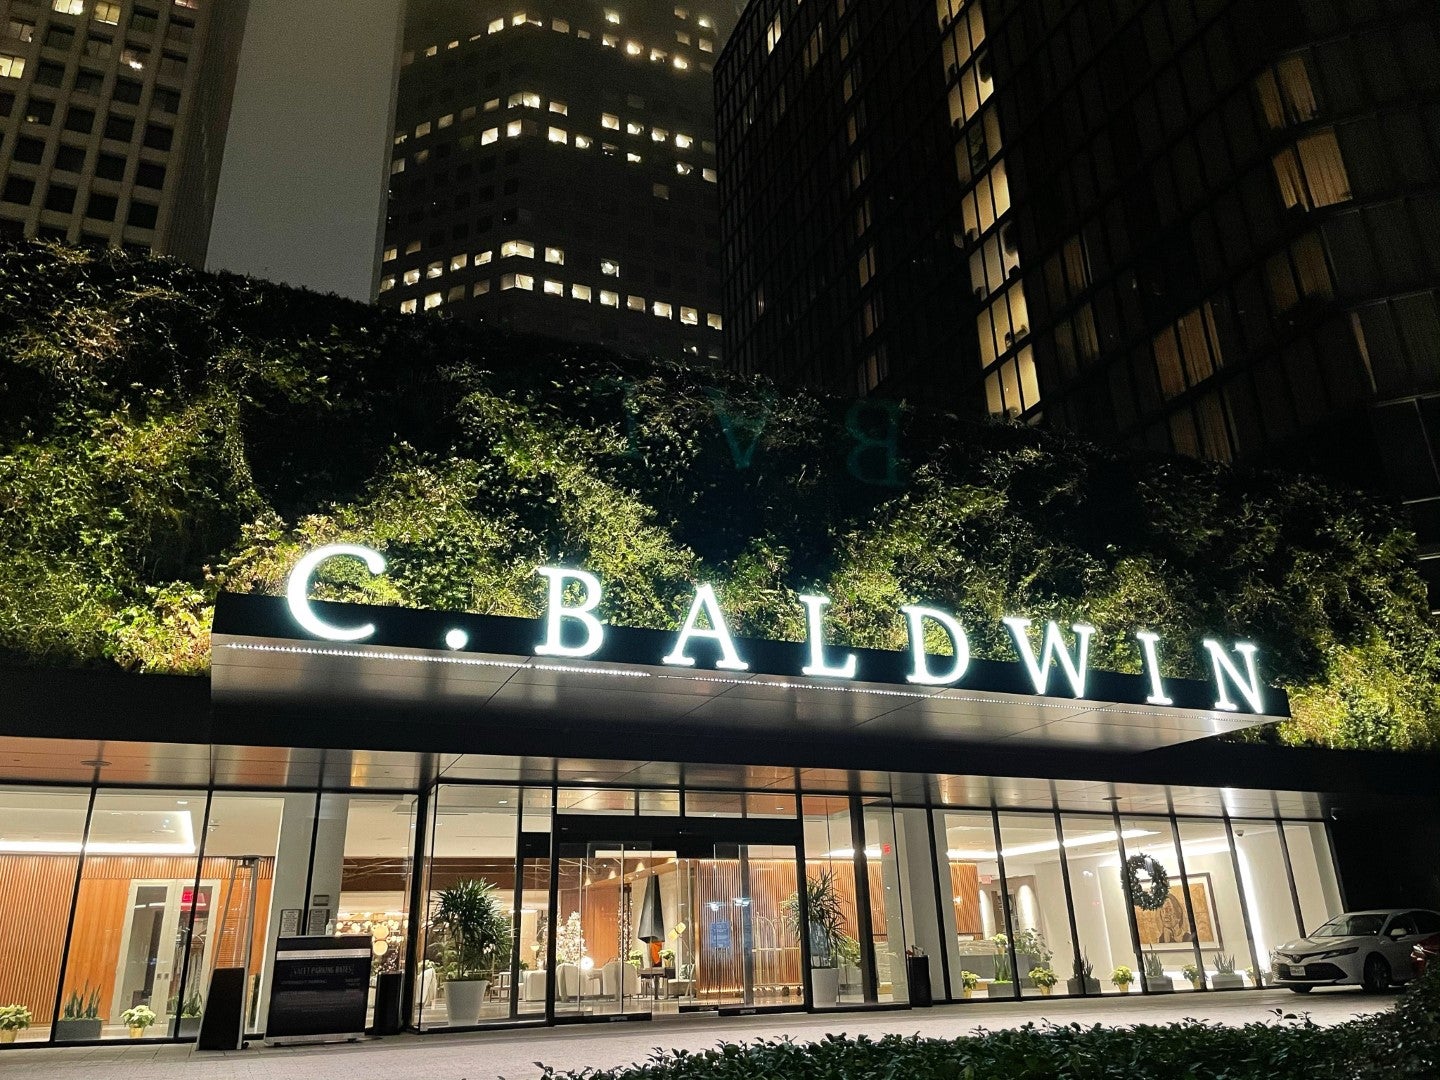 C. Baldwin Curio Collection Hilton Hotel in Houston Texas signage